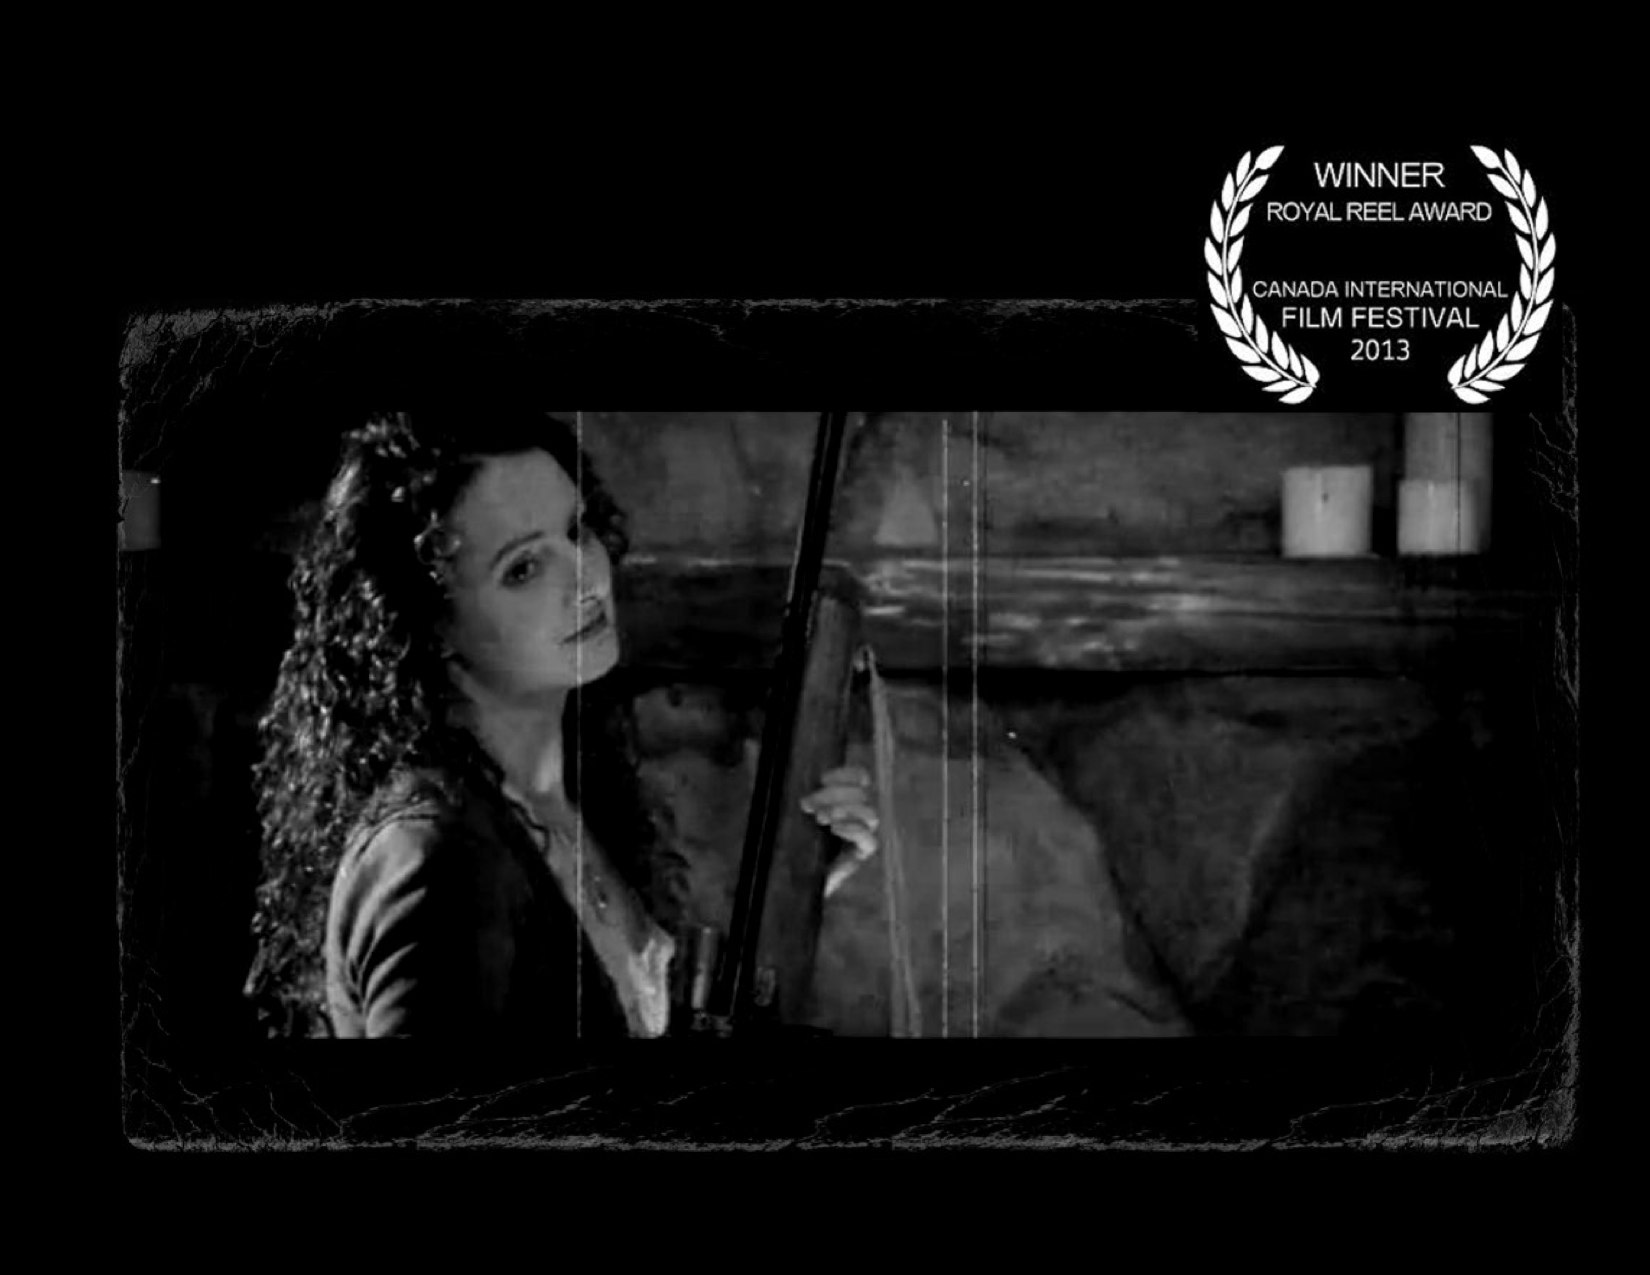 Claire on set on Truth.. Truth movie, winner Royal Reel Award Canada International Film Festival 2013